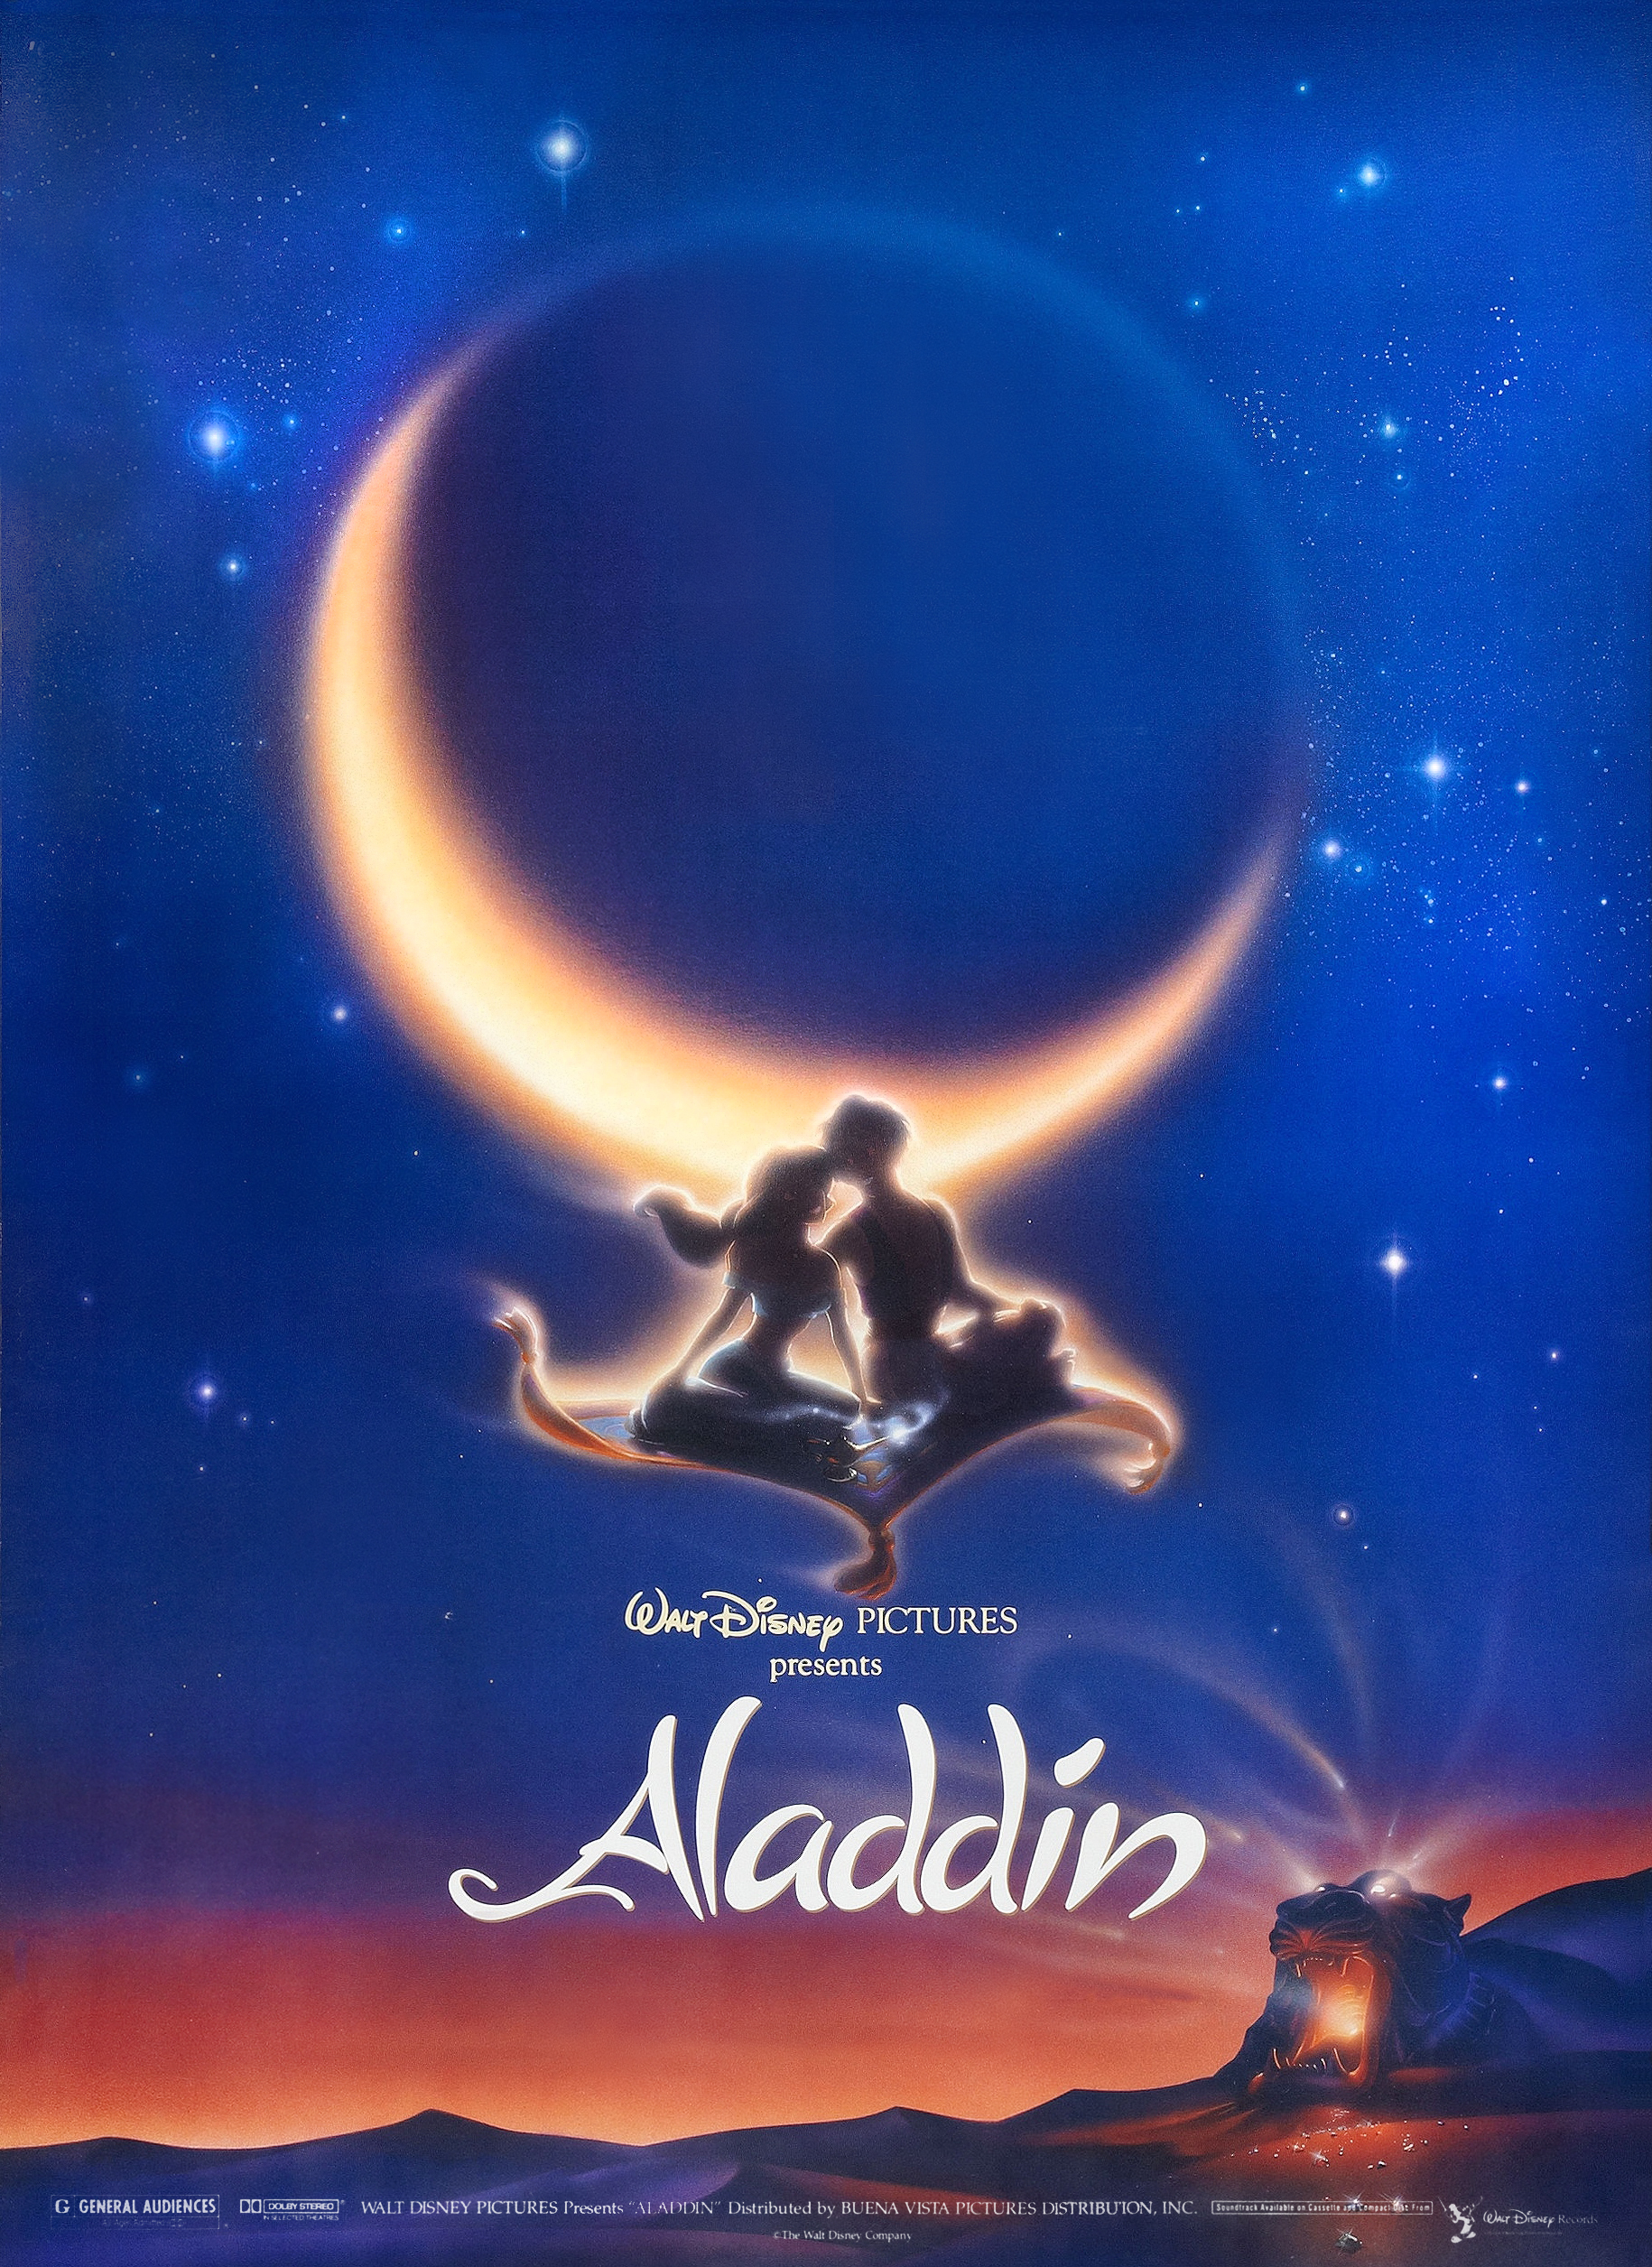 Aladdin instal the last version for apple